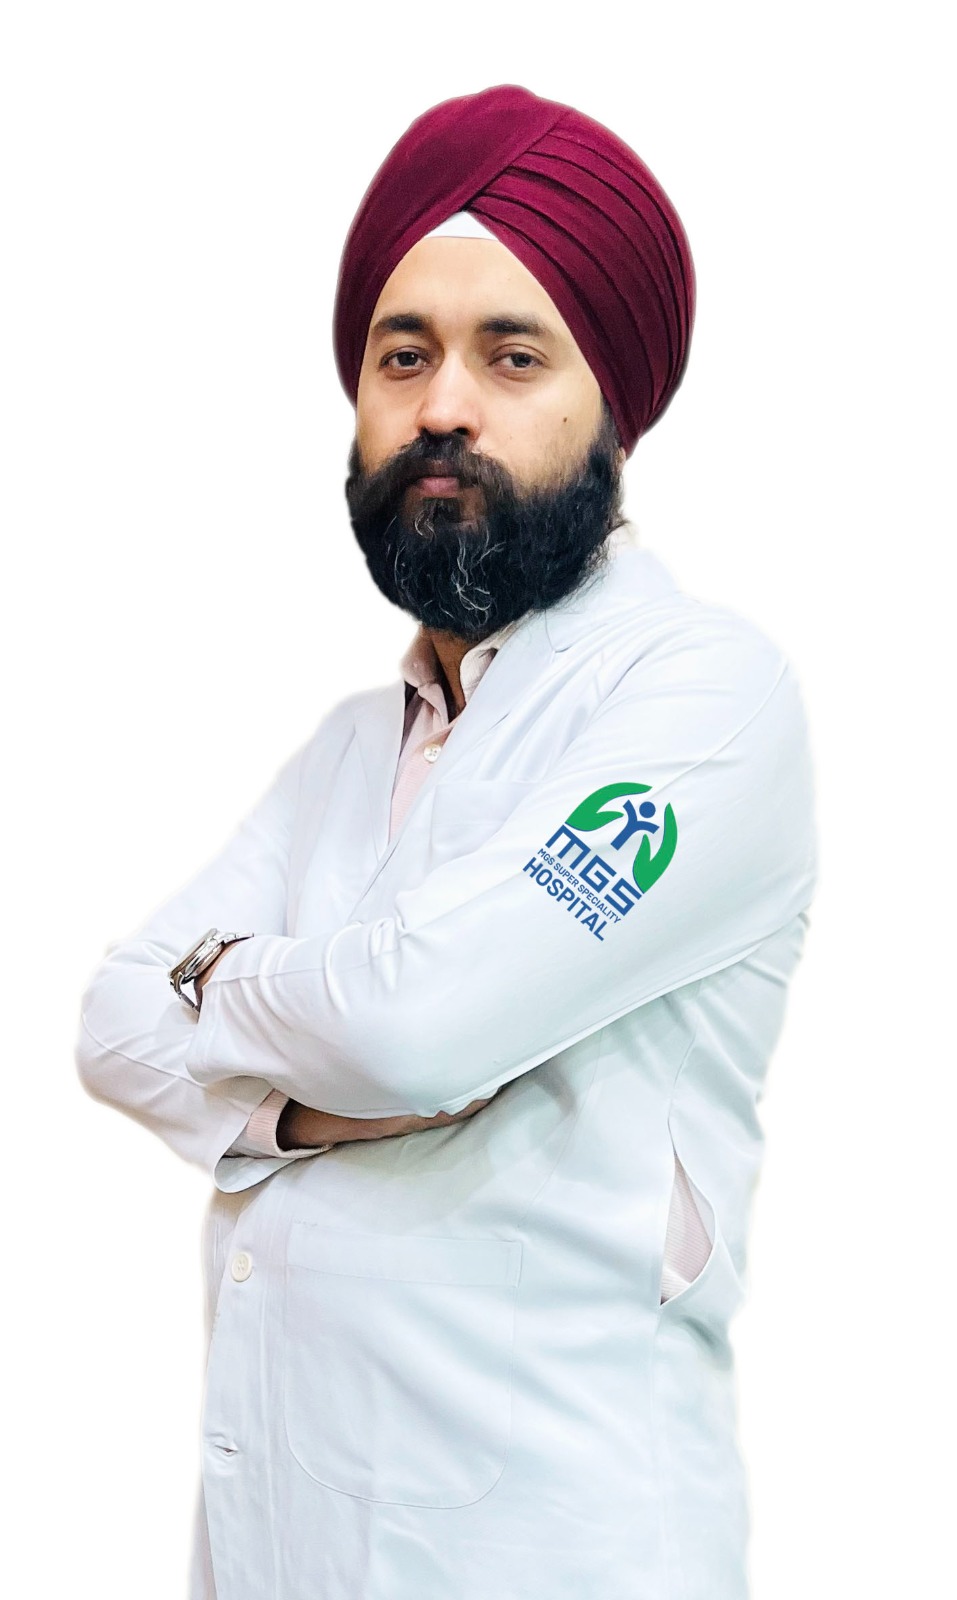 Dr. Pushpinder Singh